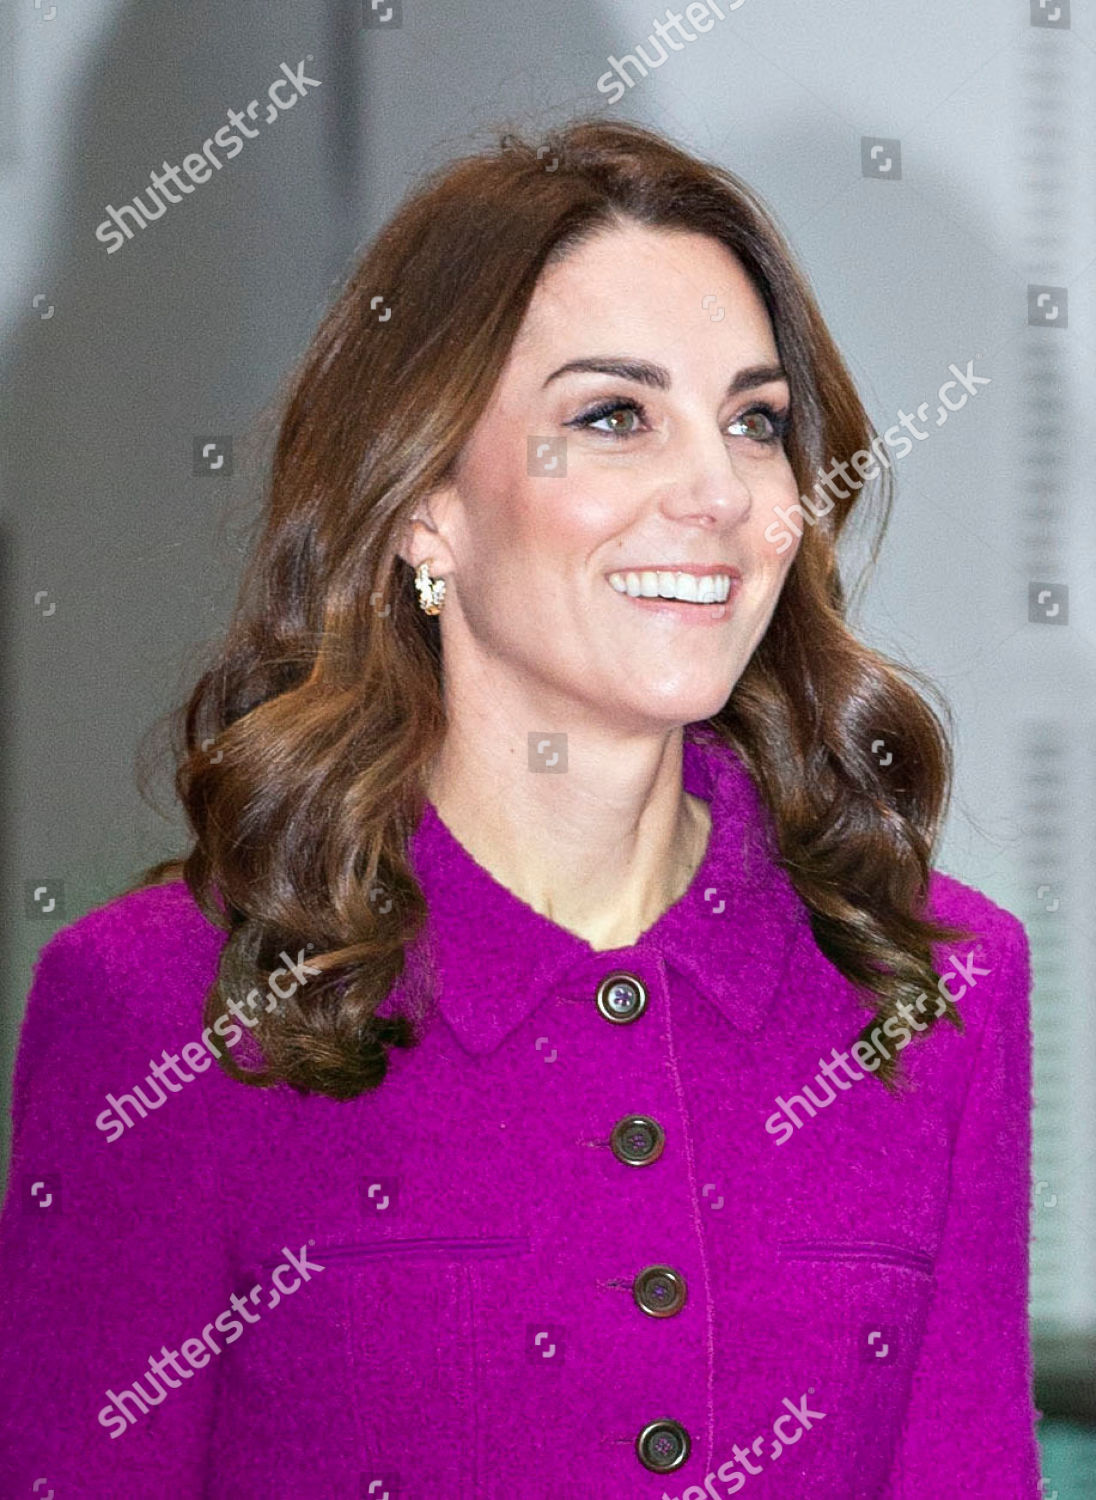 catherine-duchess-of-cambridge-visit-to-the-royal-opera-house-london-uk-shutterstock-editorial-10063922f.jpg